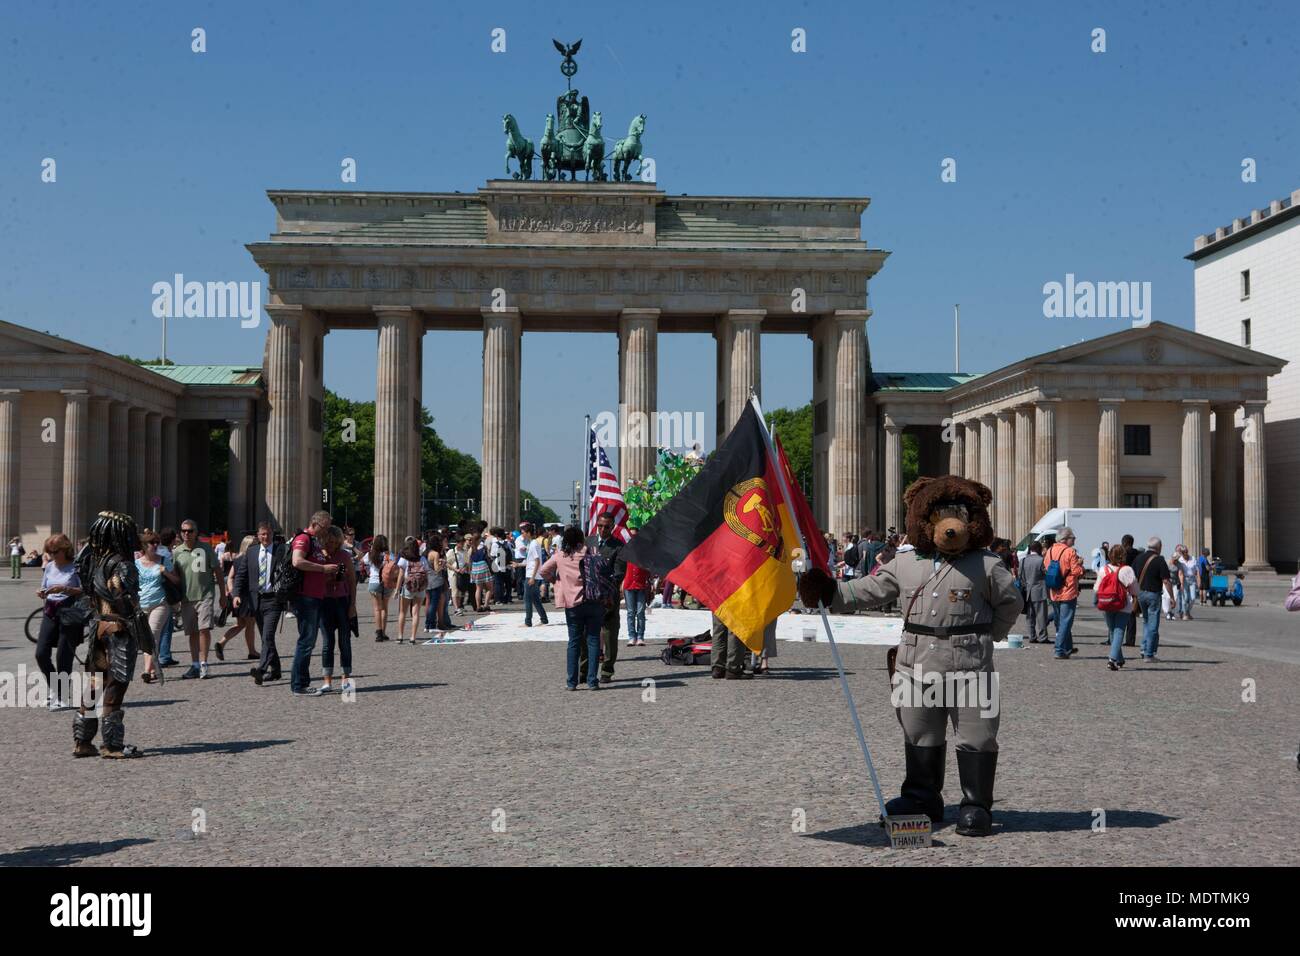 Germany Berlin Brandenburg Gate At The End Of Friederichstrasse Nostalgy Nostalgic Tourism Of East Germany Stock Photo Alamy